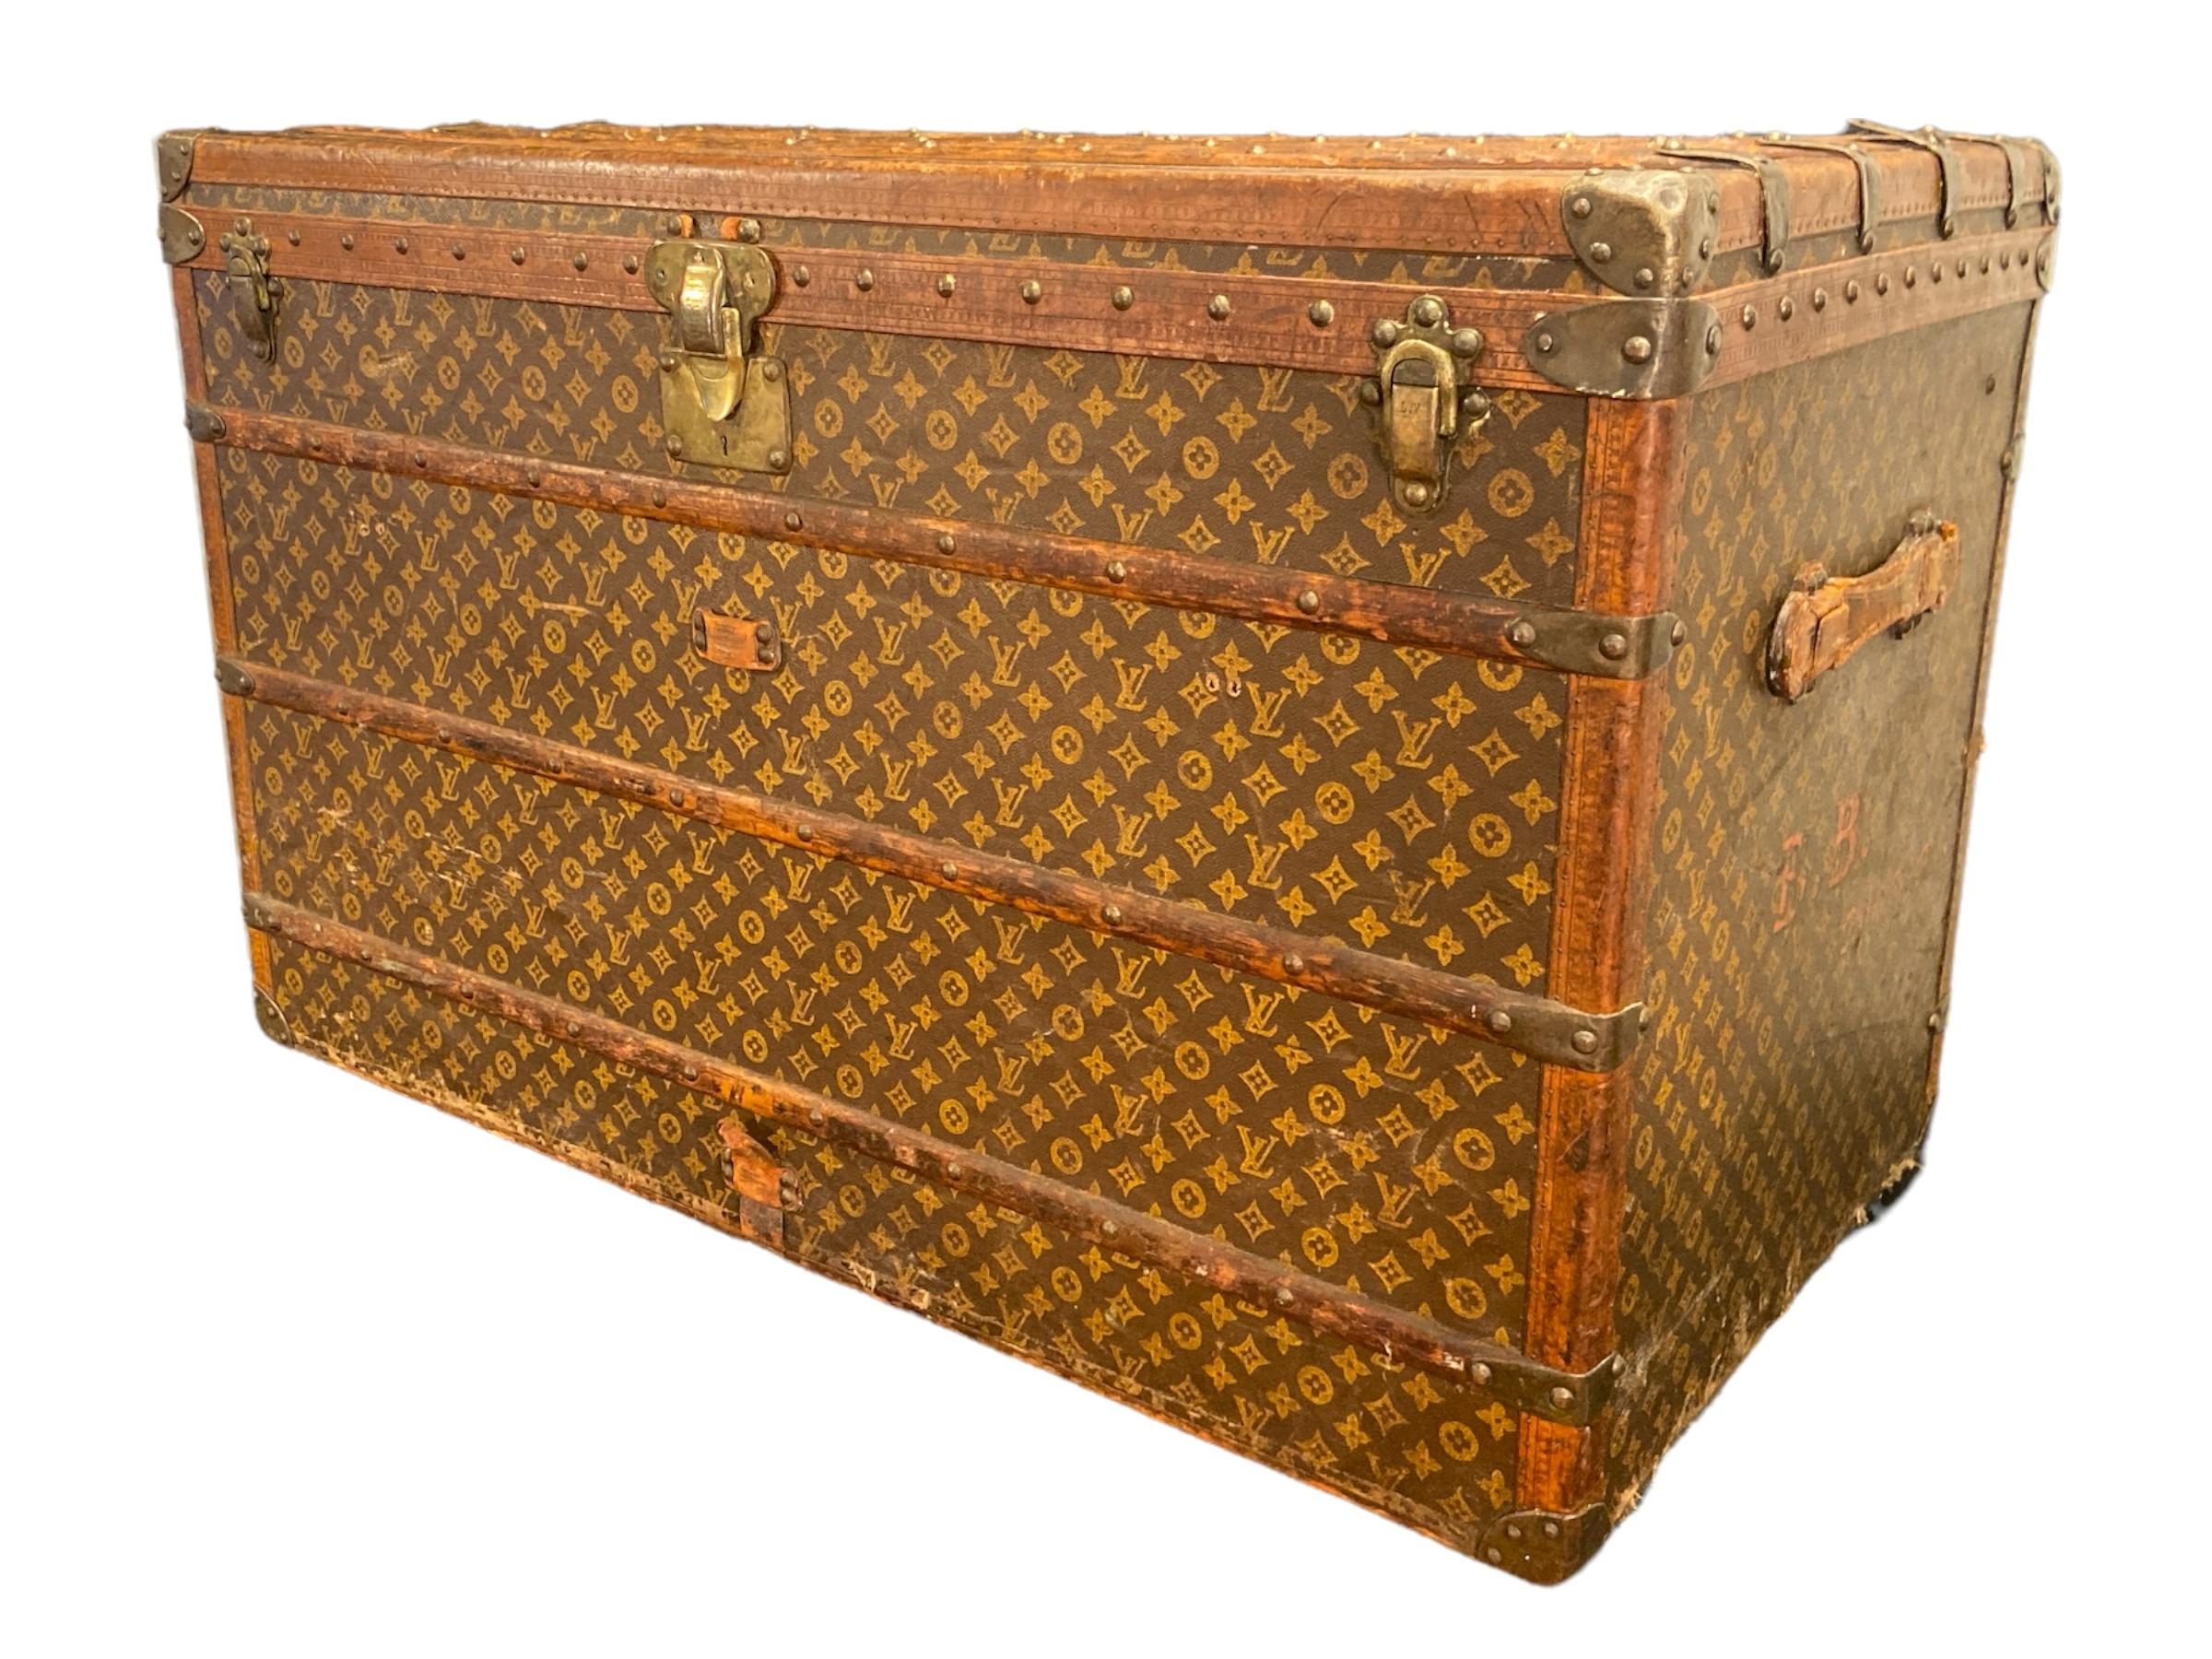 Sold at Auction: c.1920s Louis Vuitton wardrobe steamer trunk